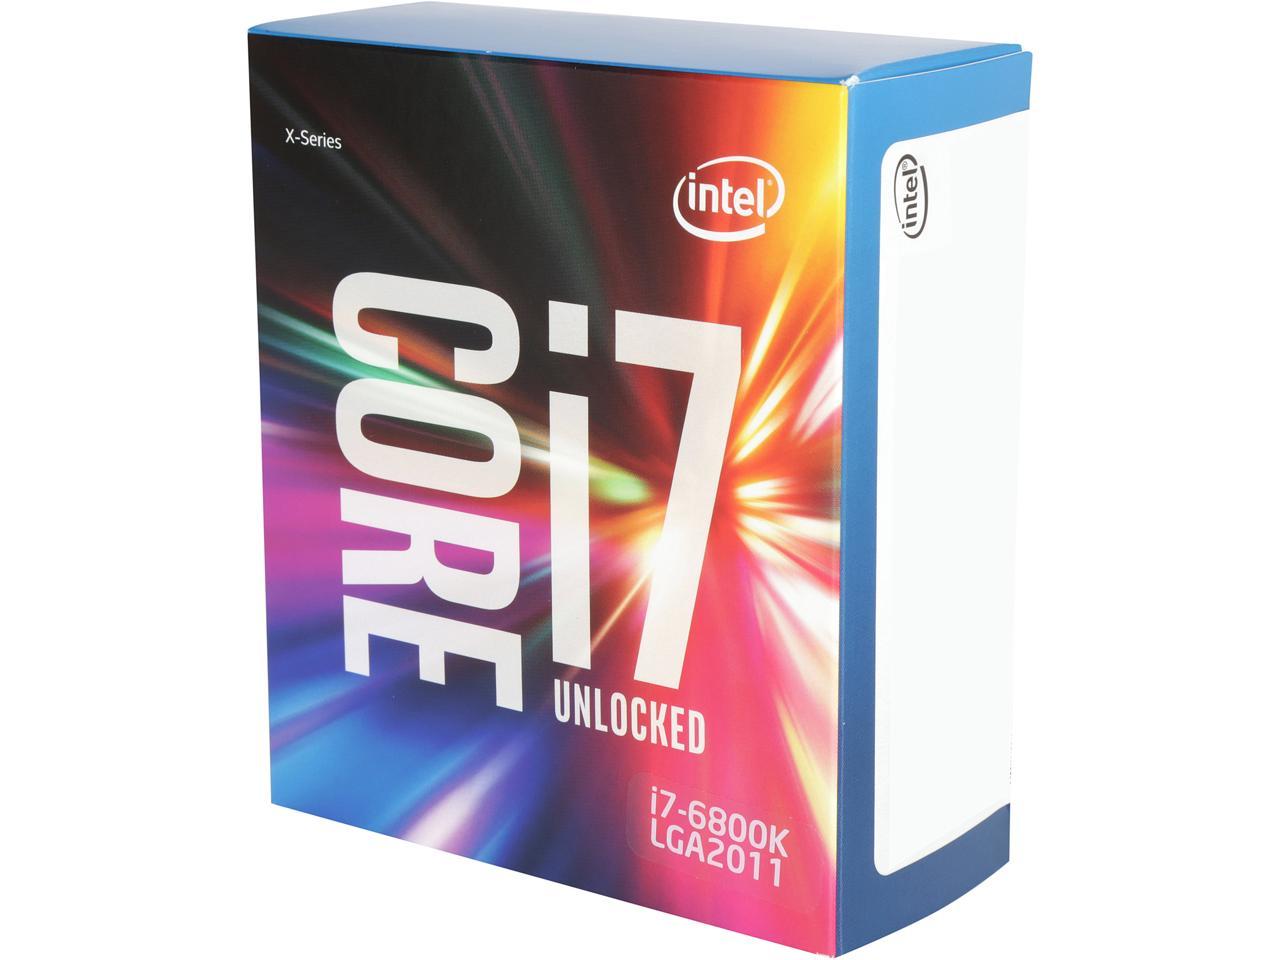 Intel Core i7-6800K Broadwell-E 6-Core 3.4 GHz LGA 2011-v3 140W BX80671I76800K Desktop Processor